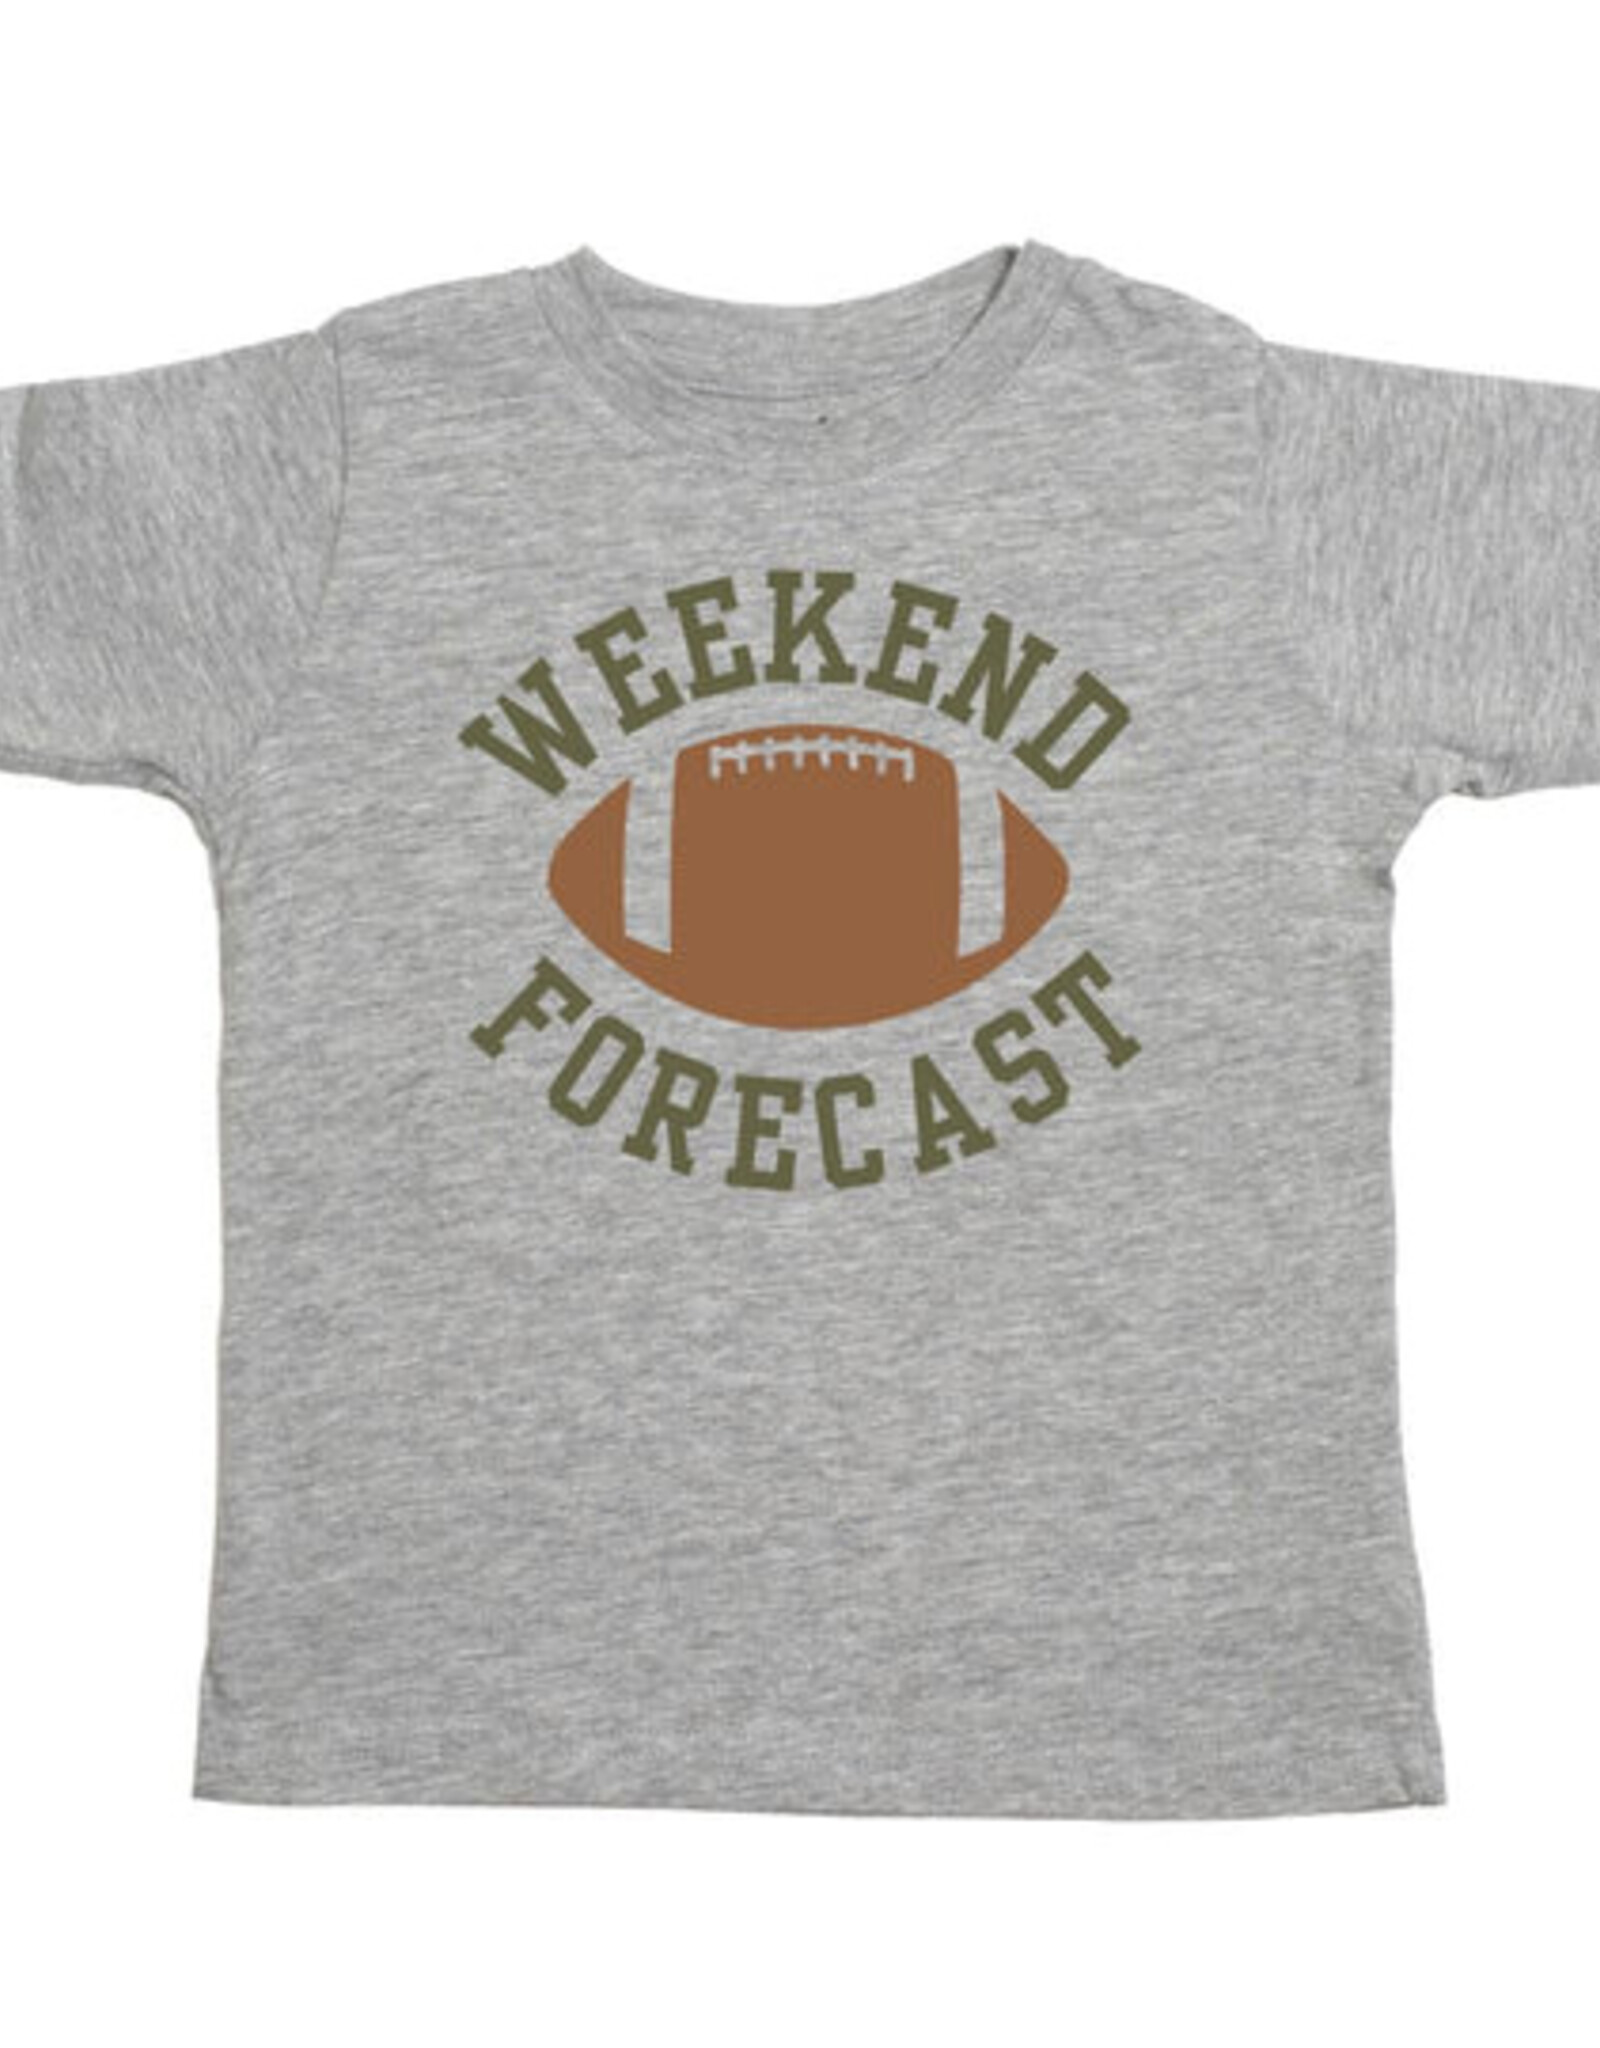 Wink 7/8YO: Weekend Forecast Short Sleeve T-Shirt - Gray